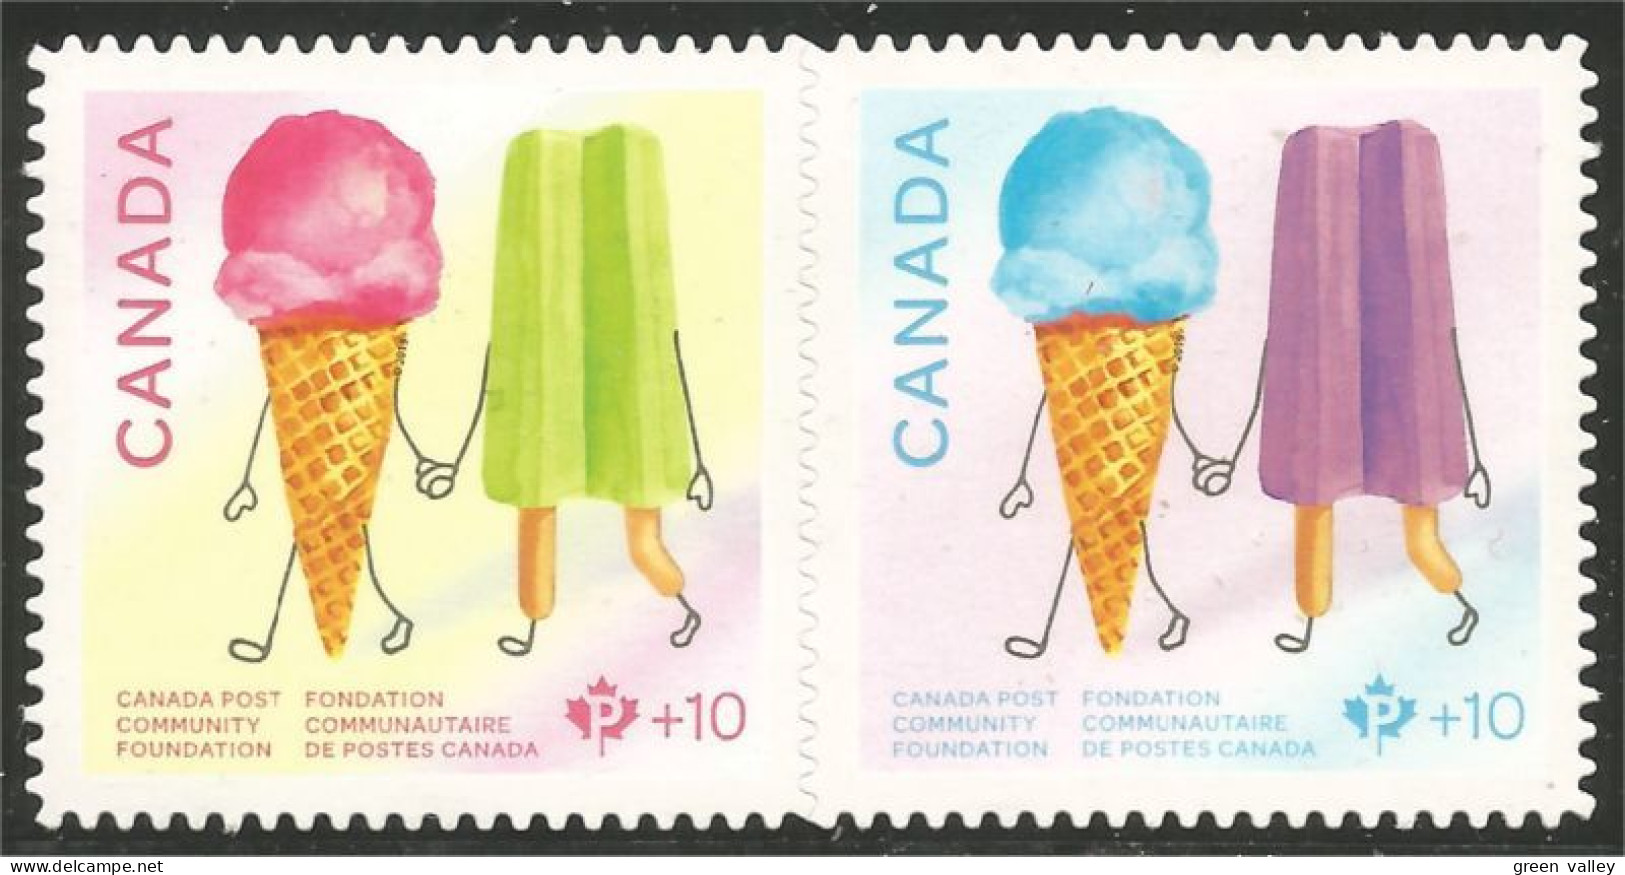 Canada Ice Cream Crème Glacée Glace Gelato Helado Eis Annual Collection Annuelle MNH ** Neuf SC (CB-28-29ia) - Nuovi